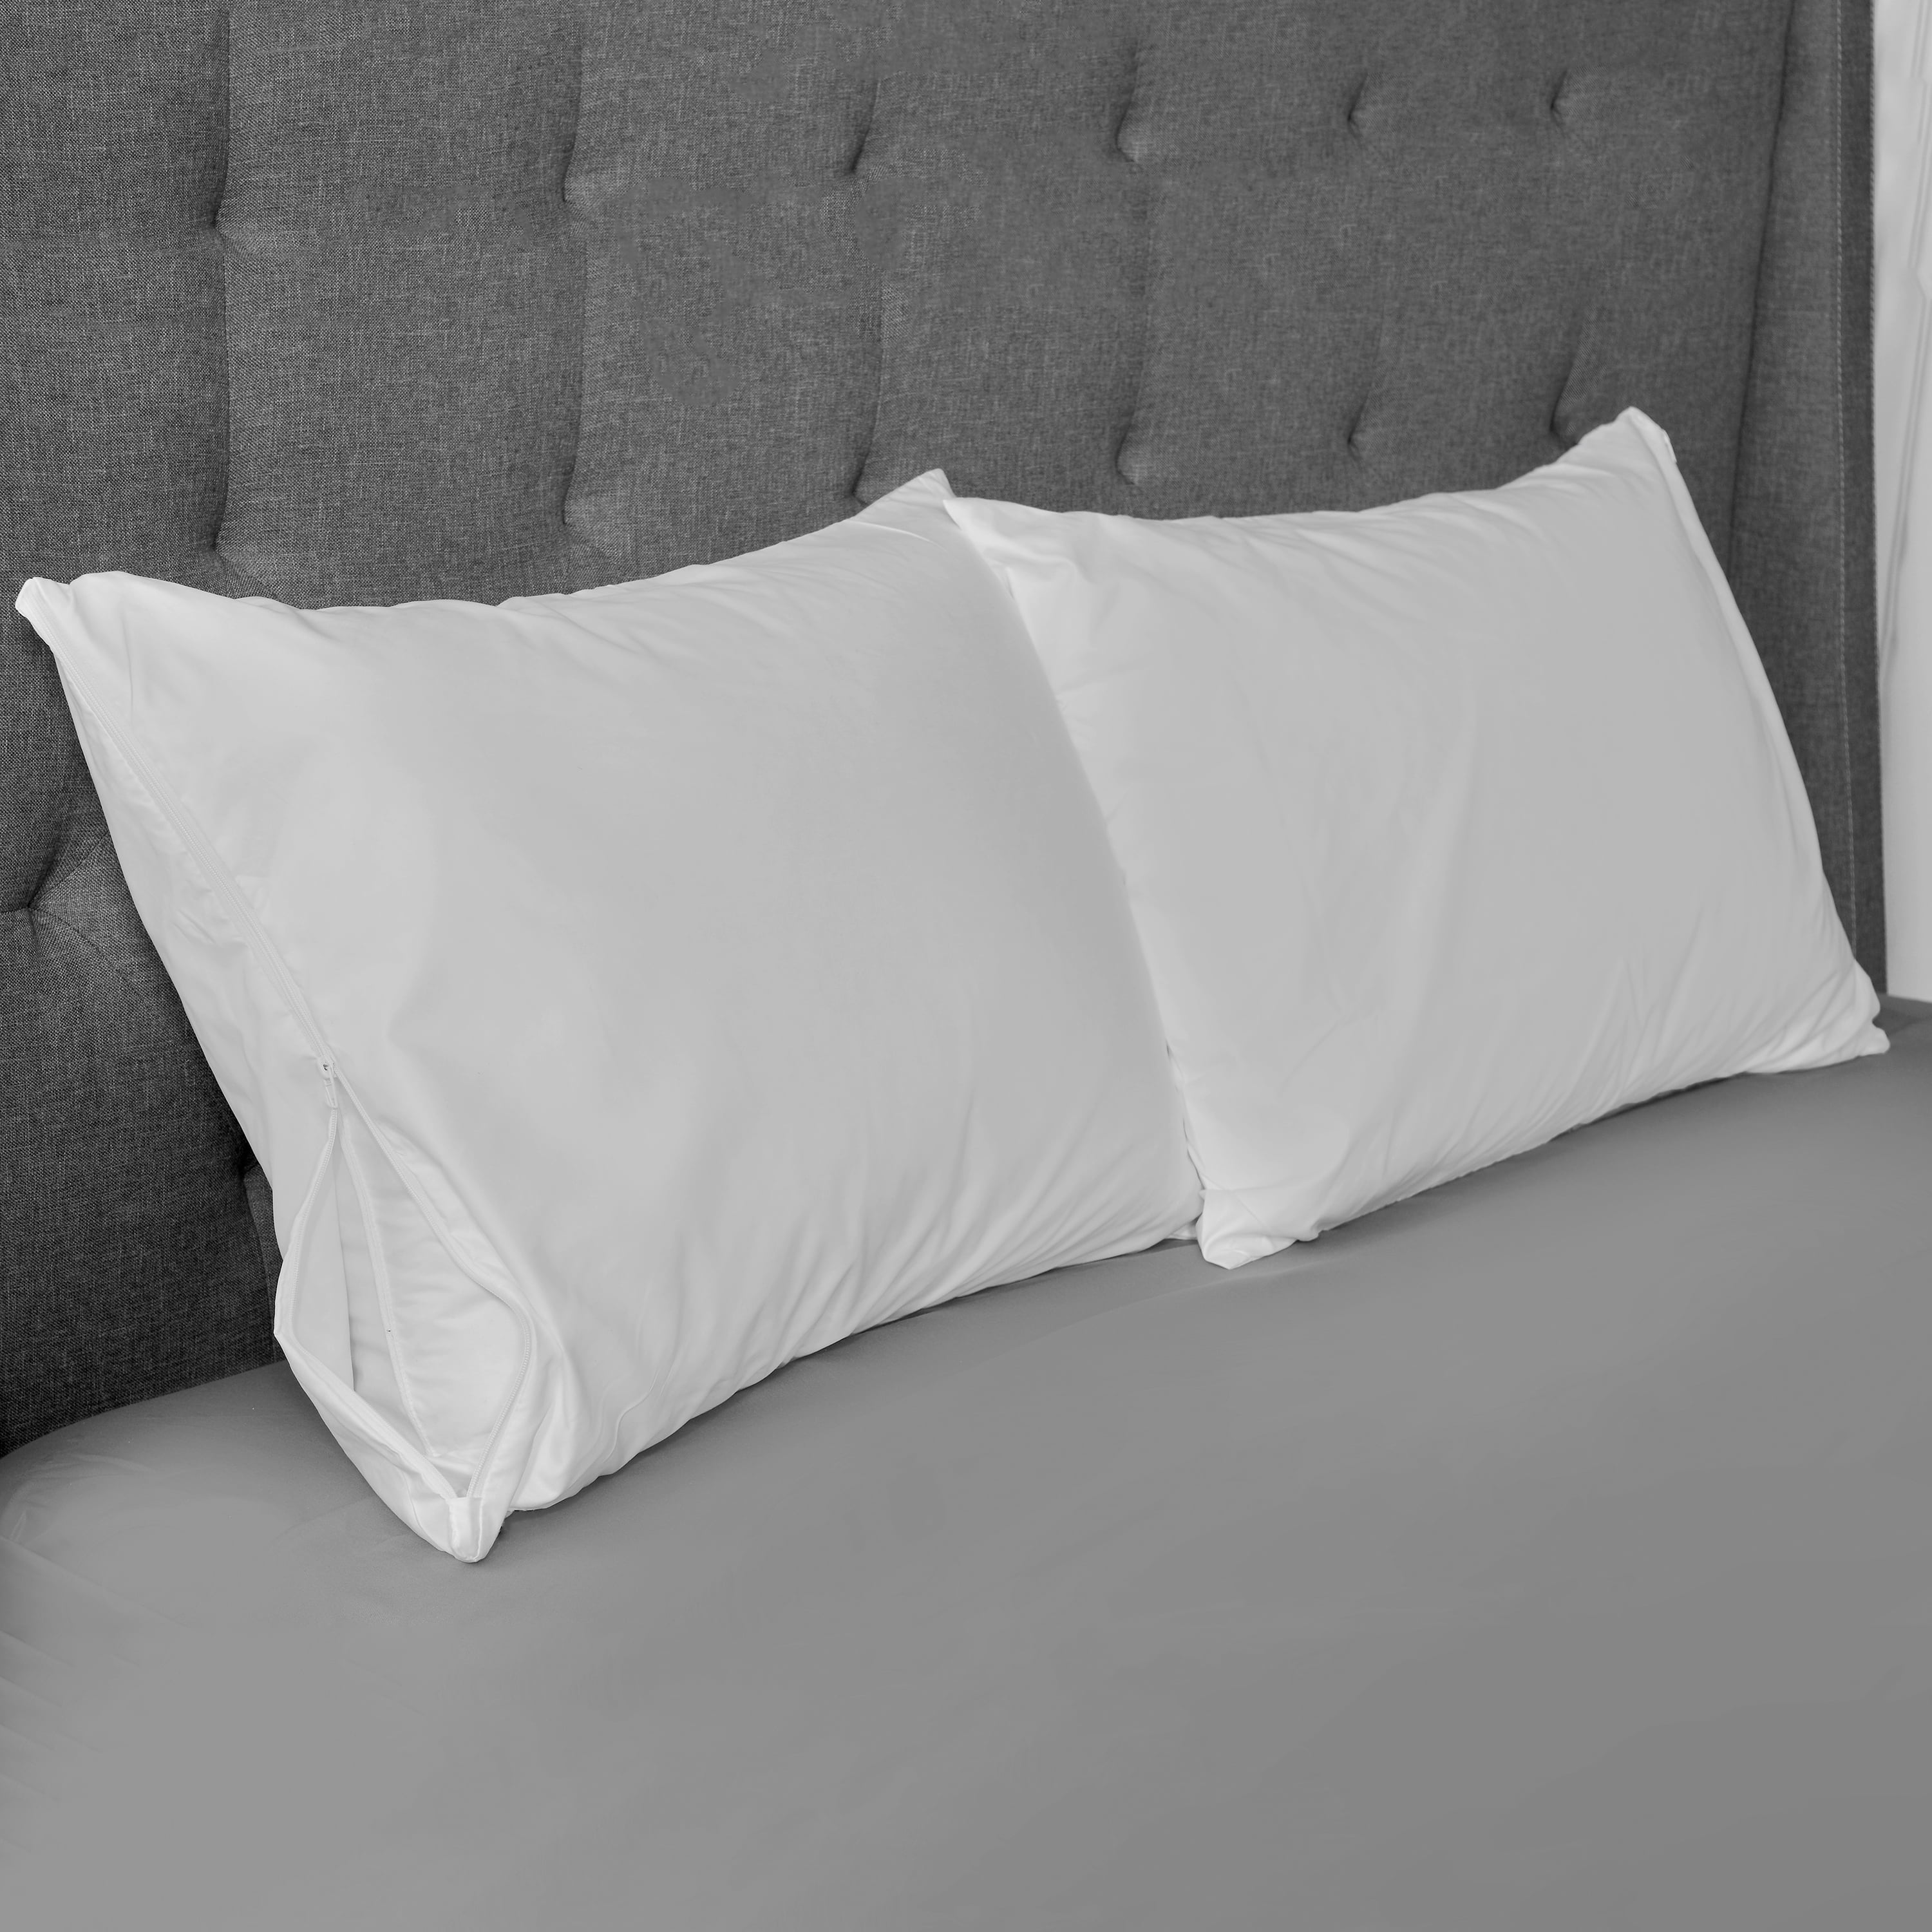 Starhomeware Fresh Nights Anti Allergy Zipped 100% Cotton Pair of Pillow Protectors White 